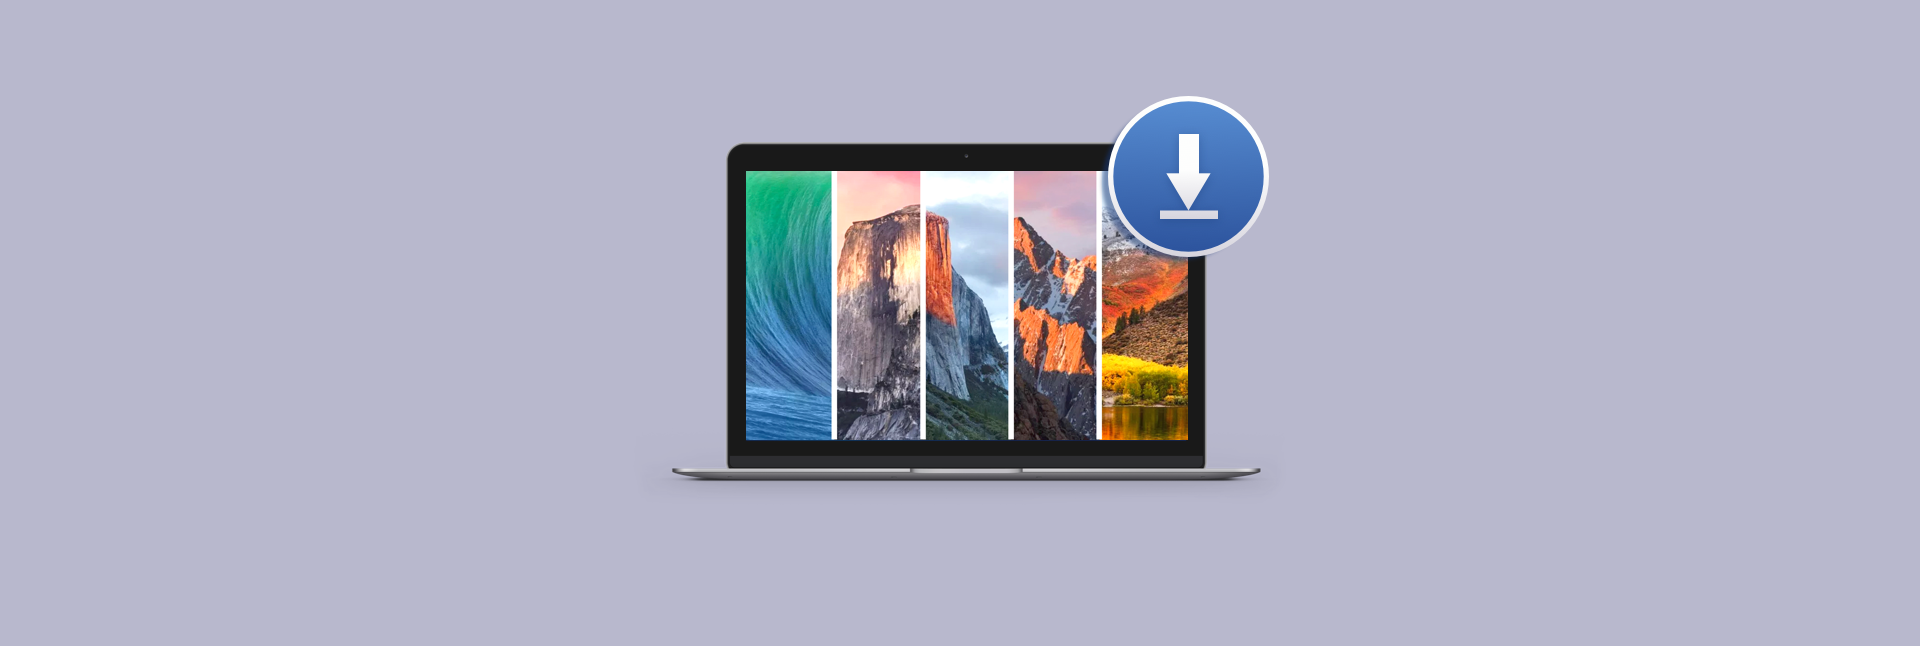 Download Mac Os 10.12 Ios